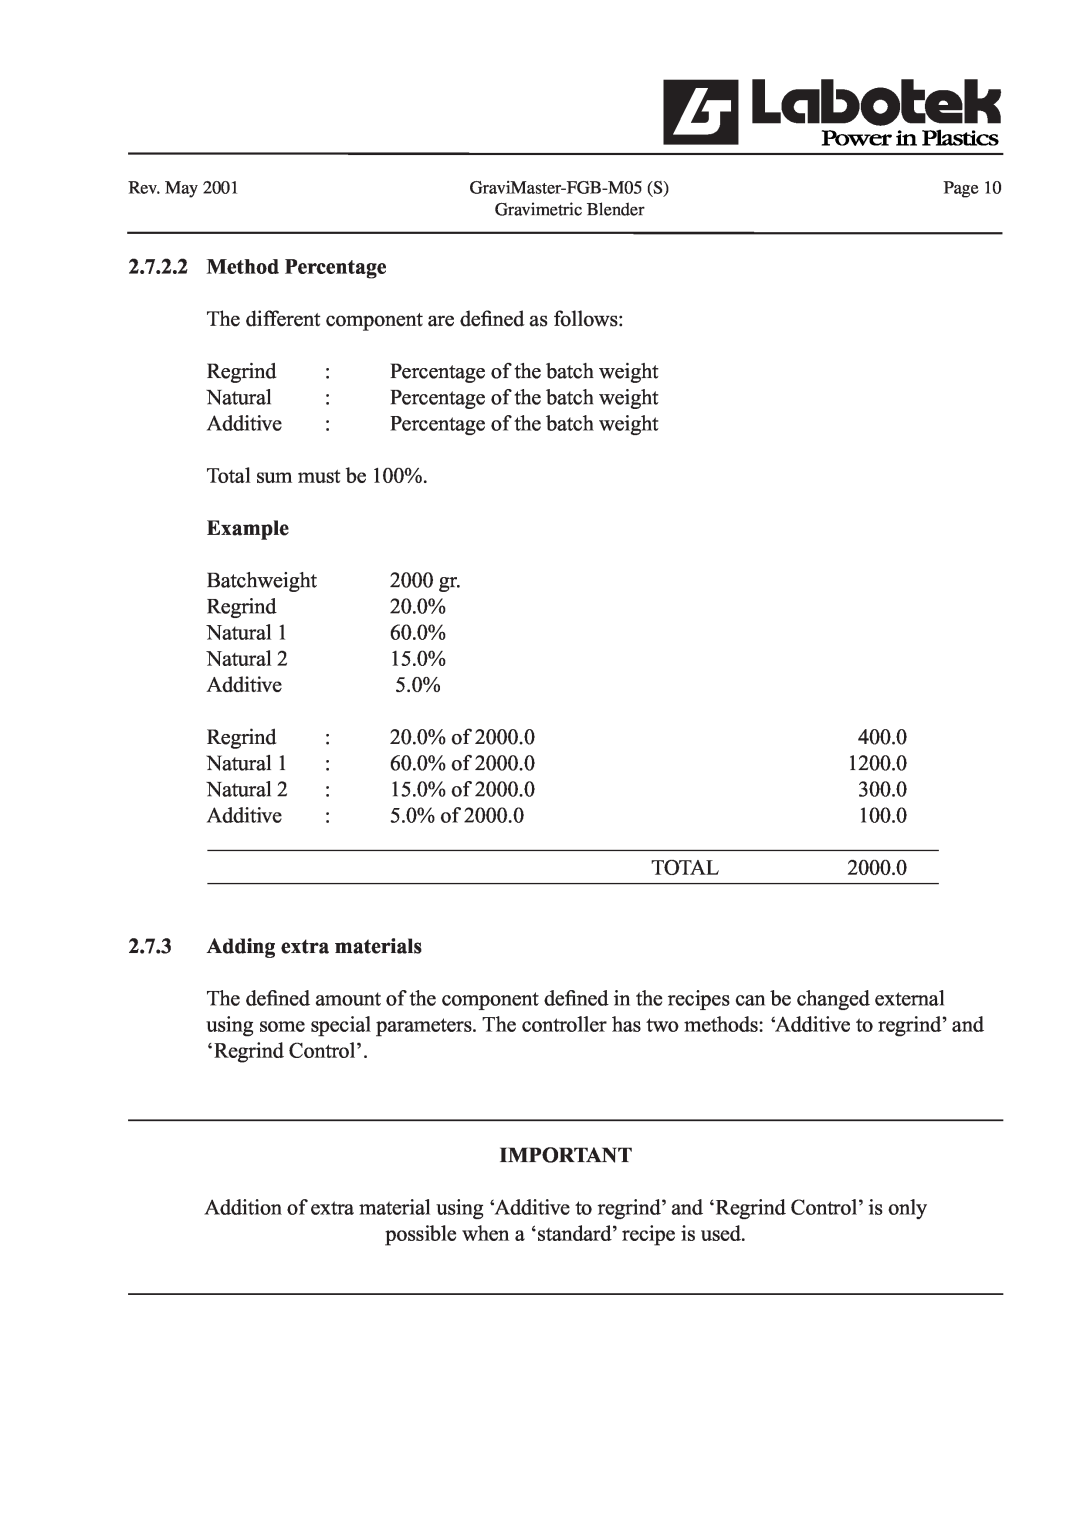 GE FGB-M05 manual 2.7.2.2Method Percentage, 2.7.3Adding extra materials, Example 